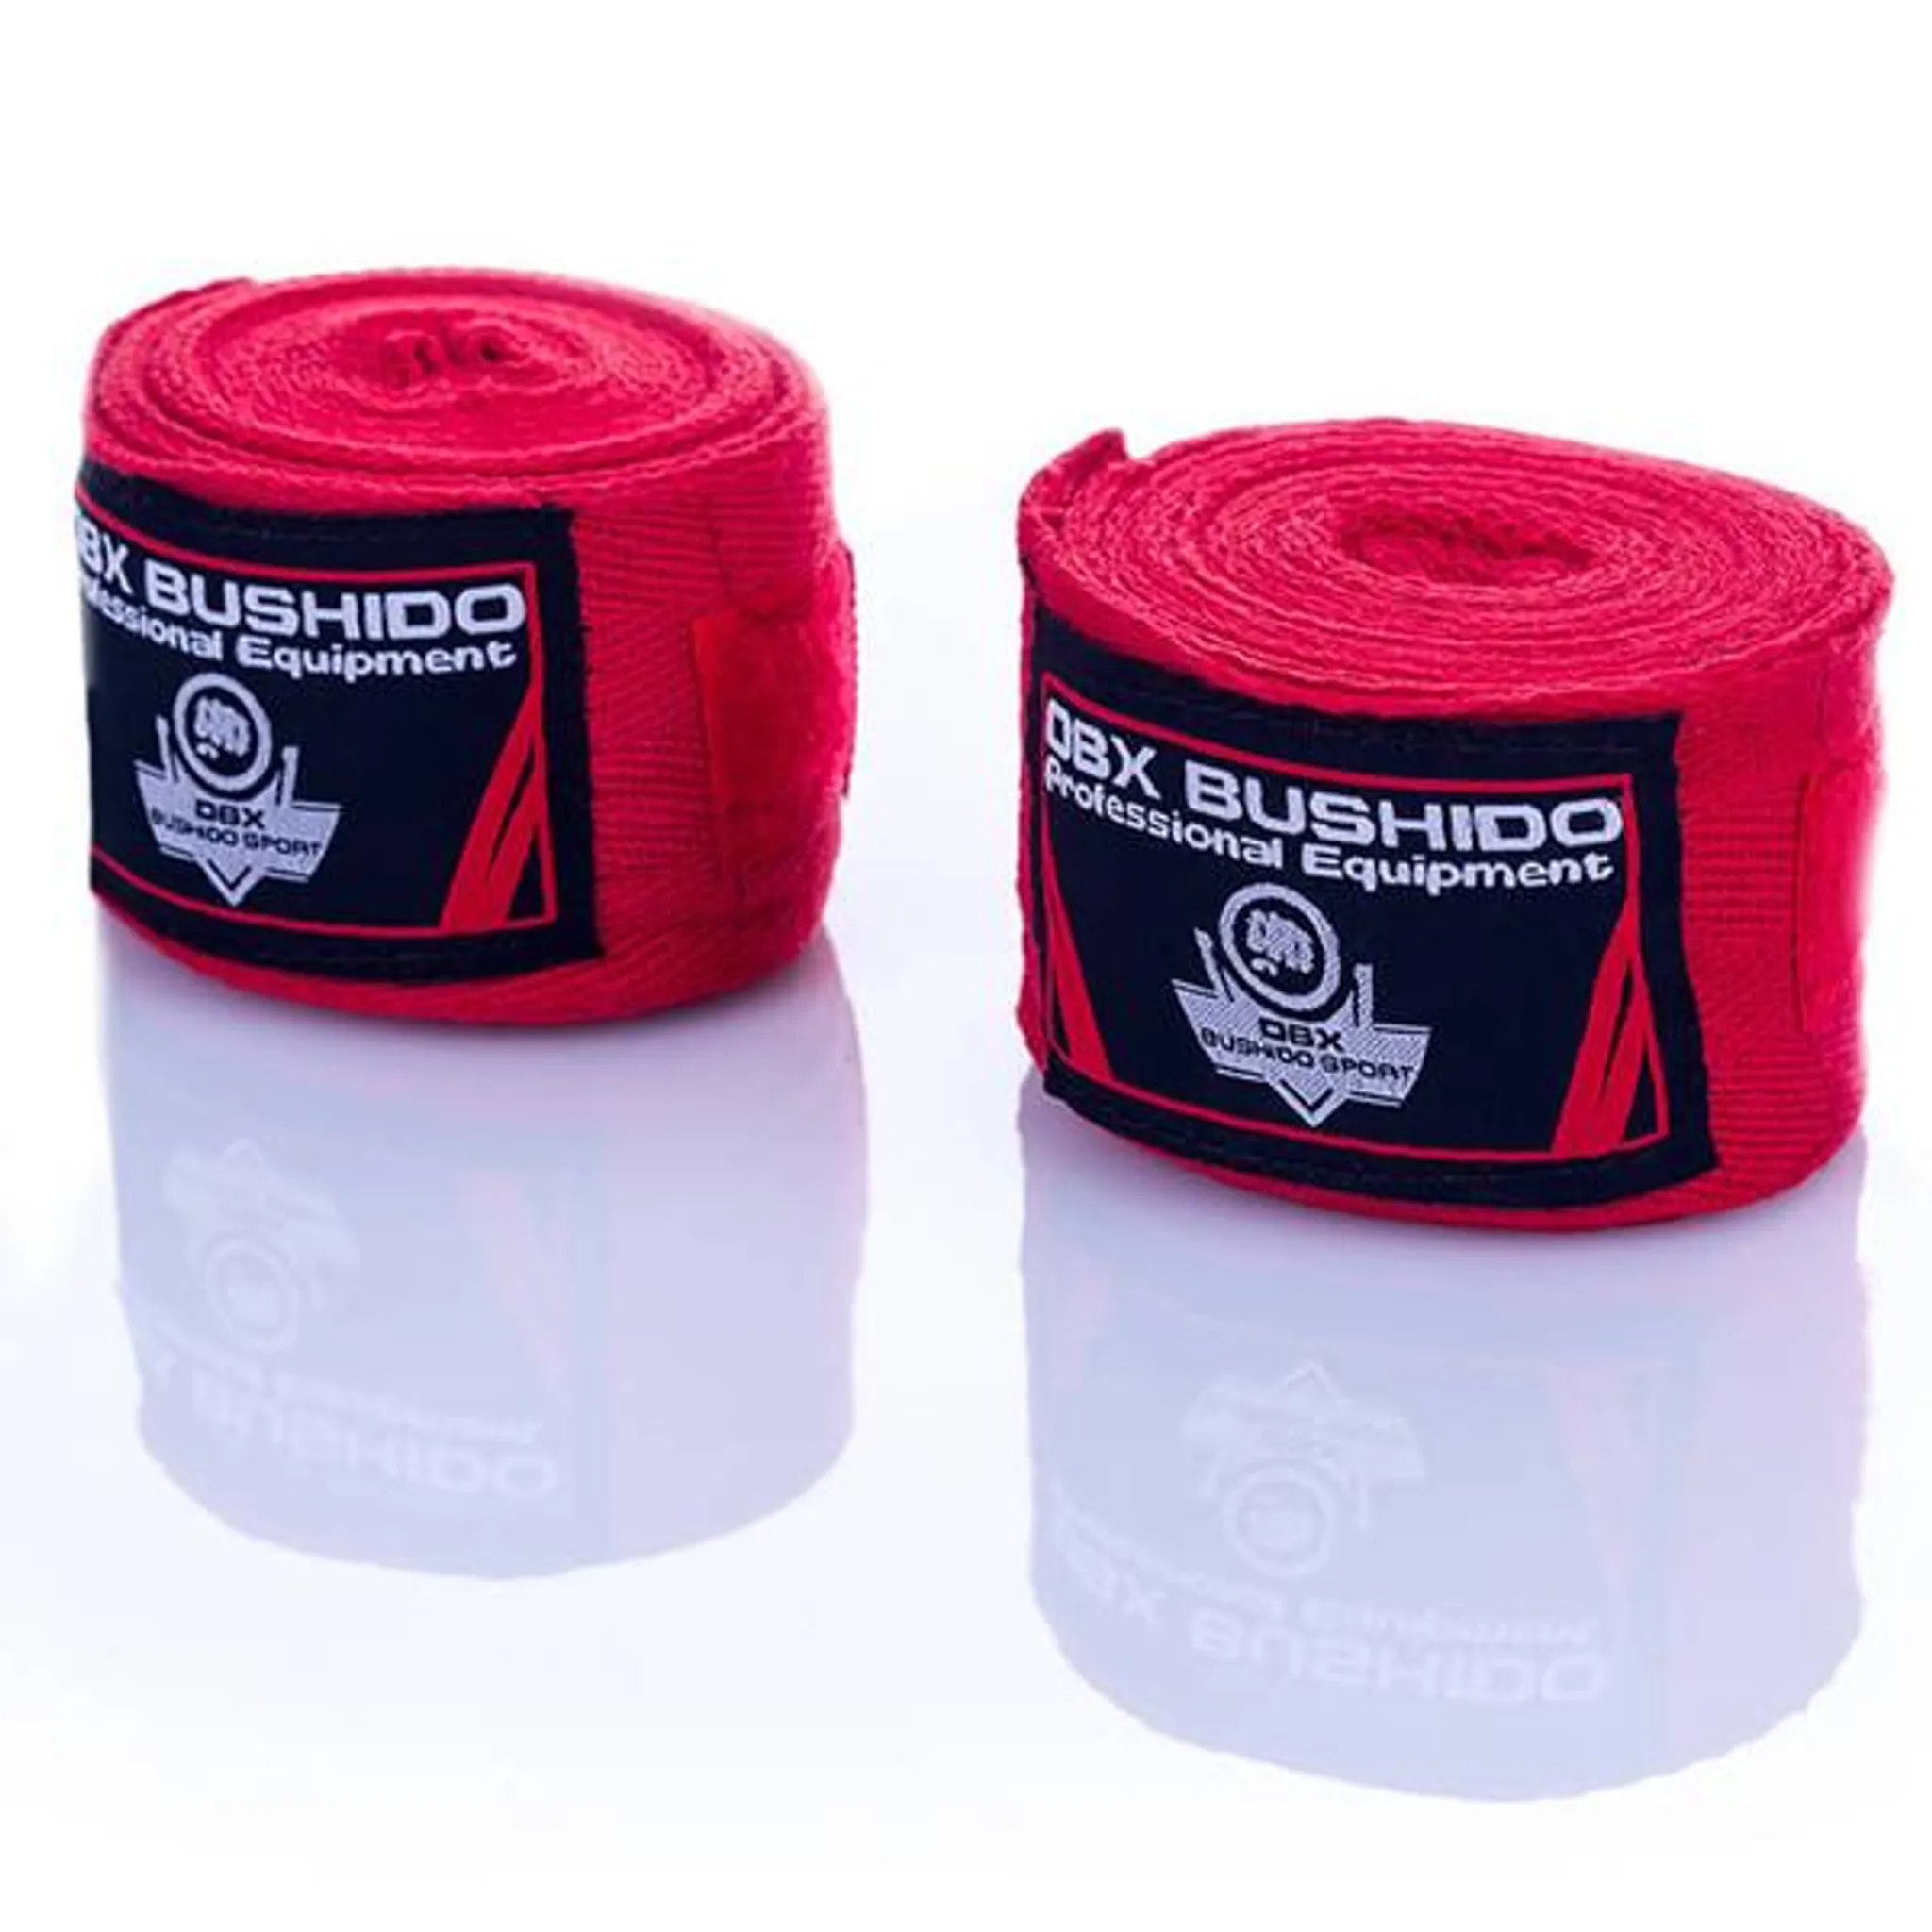 DBX BUSHIDO SPORT Bande Boxe 100% Coton - Bandage Main Boxe